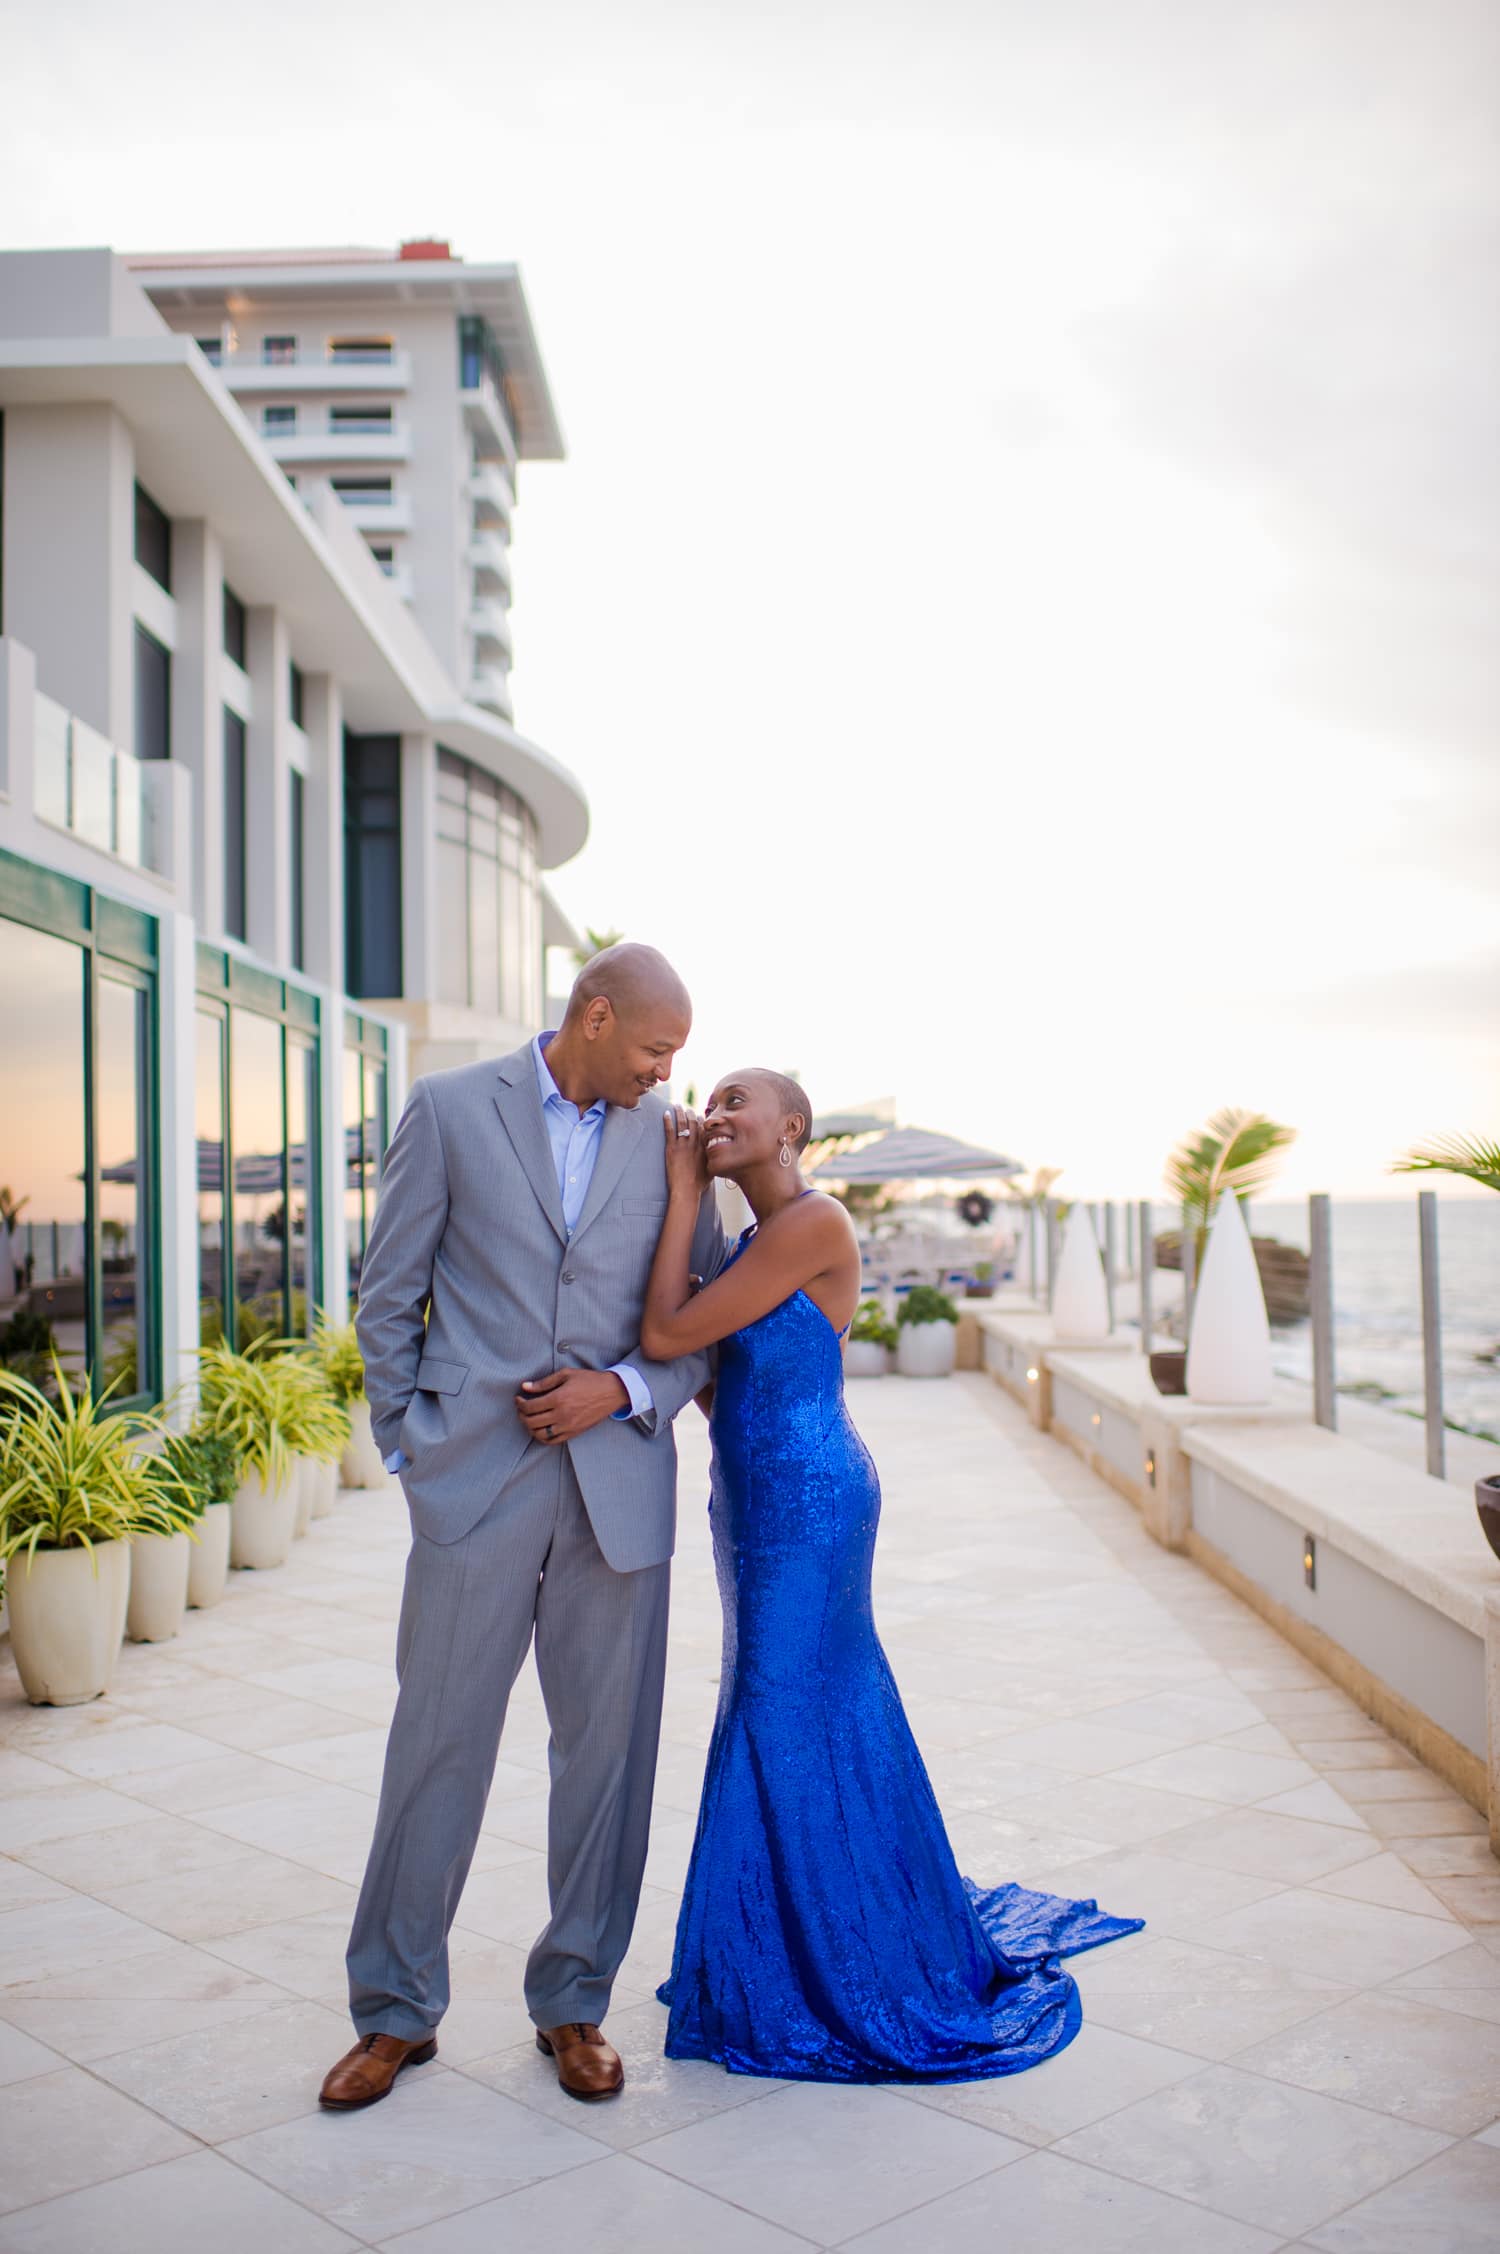 newlywed photos at Condado Vanderbilt by Puerto Rico photographer Camille Fontz